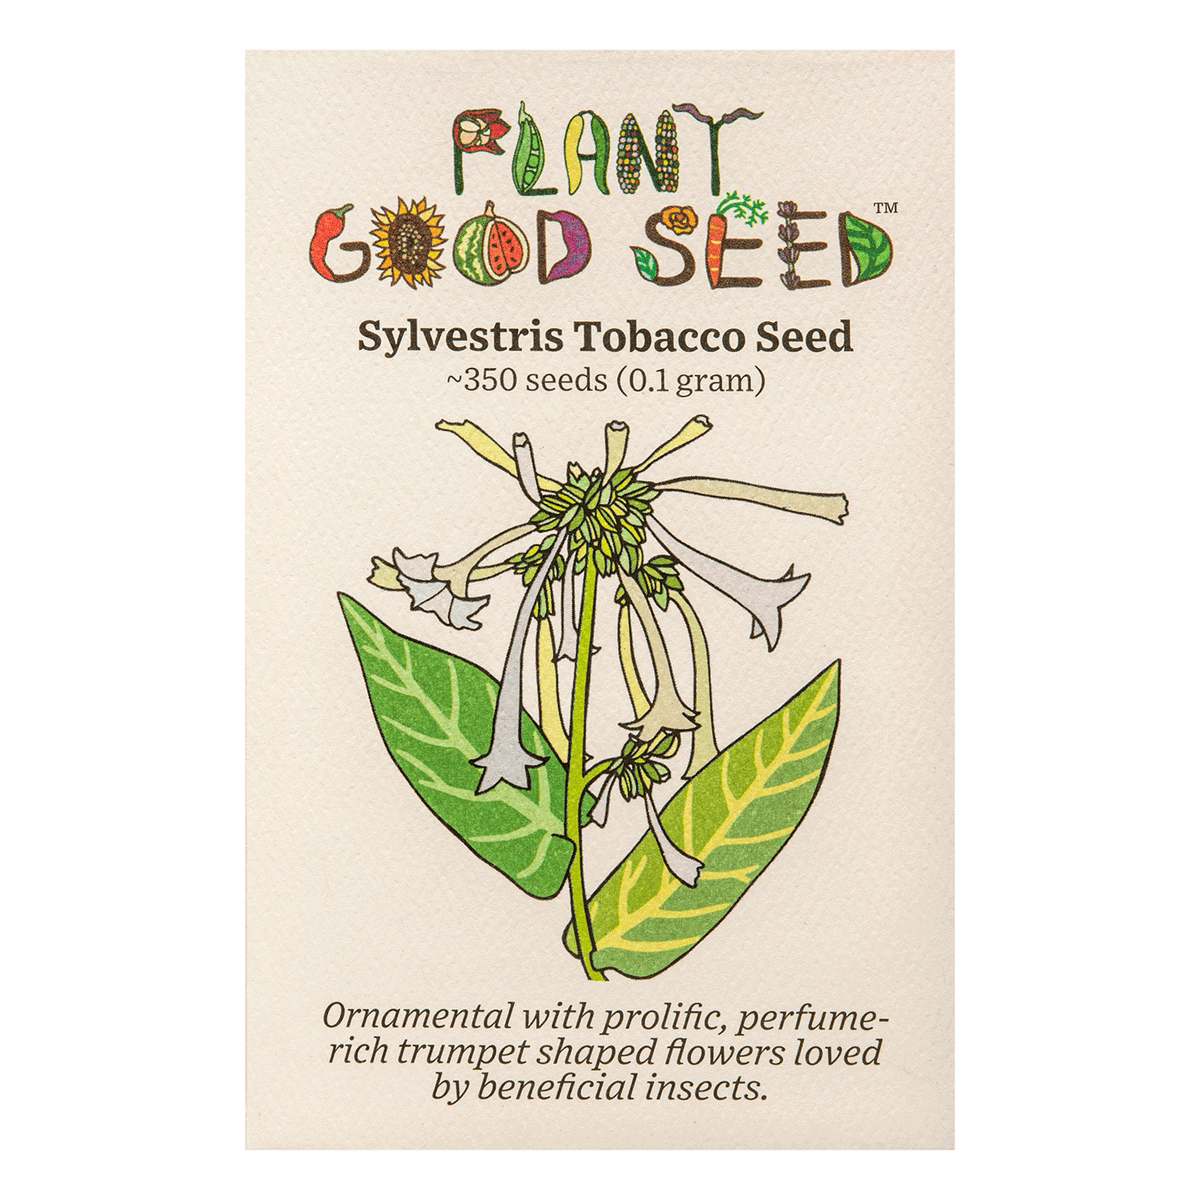 Sylvestris / Woodland Tobacco Seed